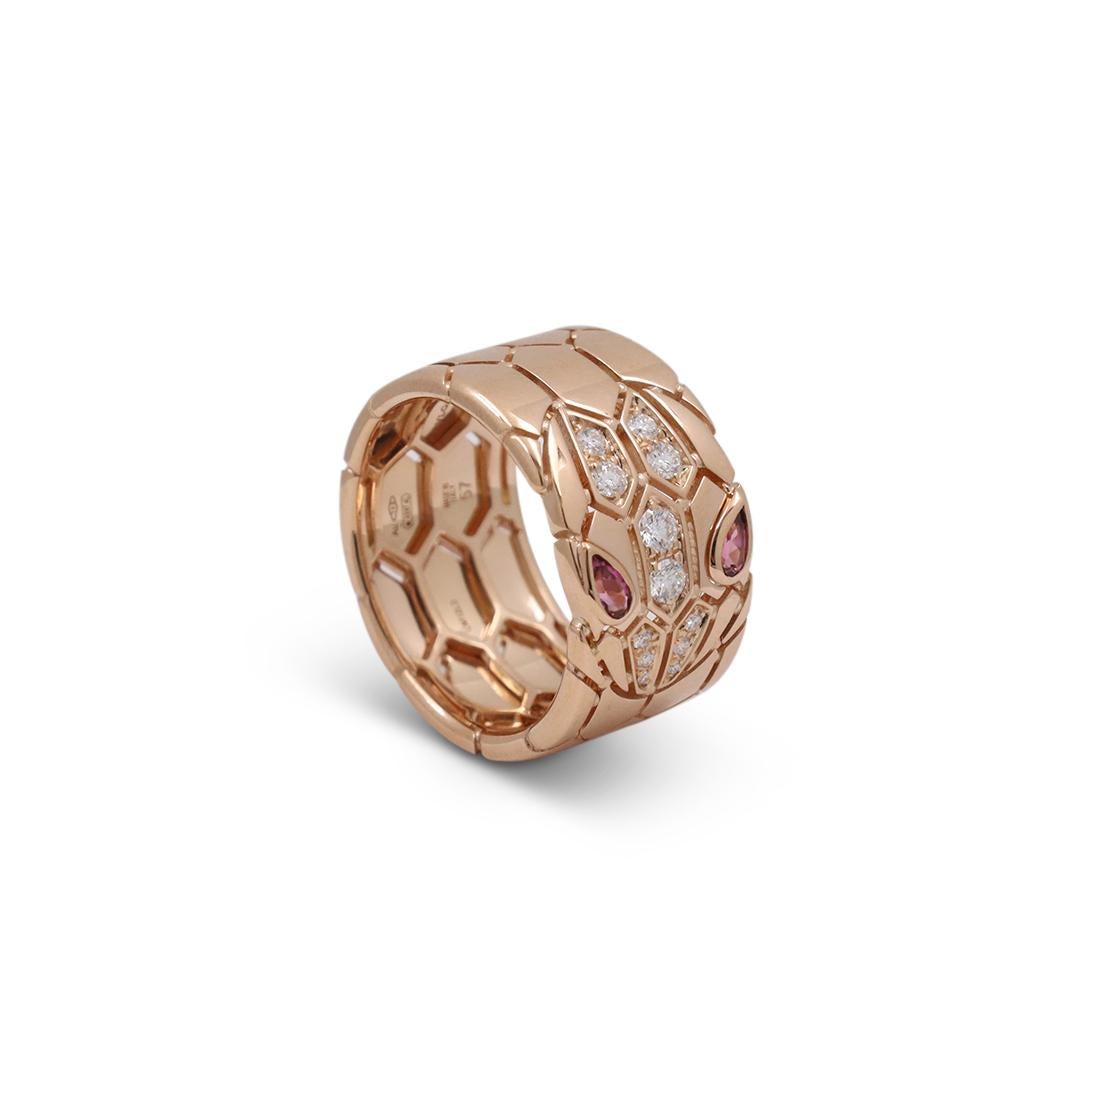 Brilliant Cut Bvlgari 'Serpenti Seduttori' Rose Gold Diamond and Rubellite Ring